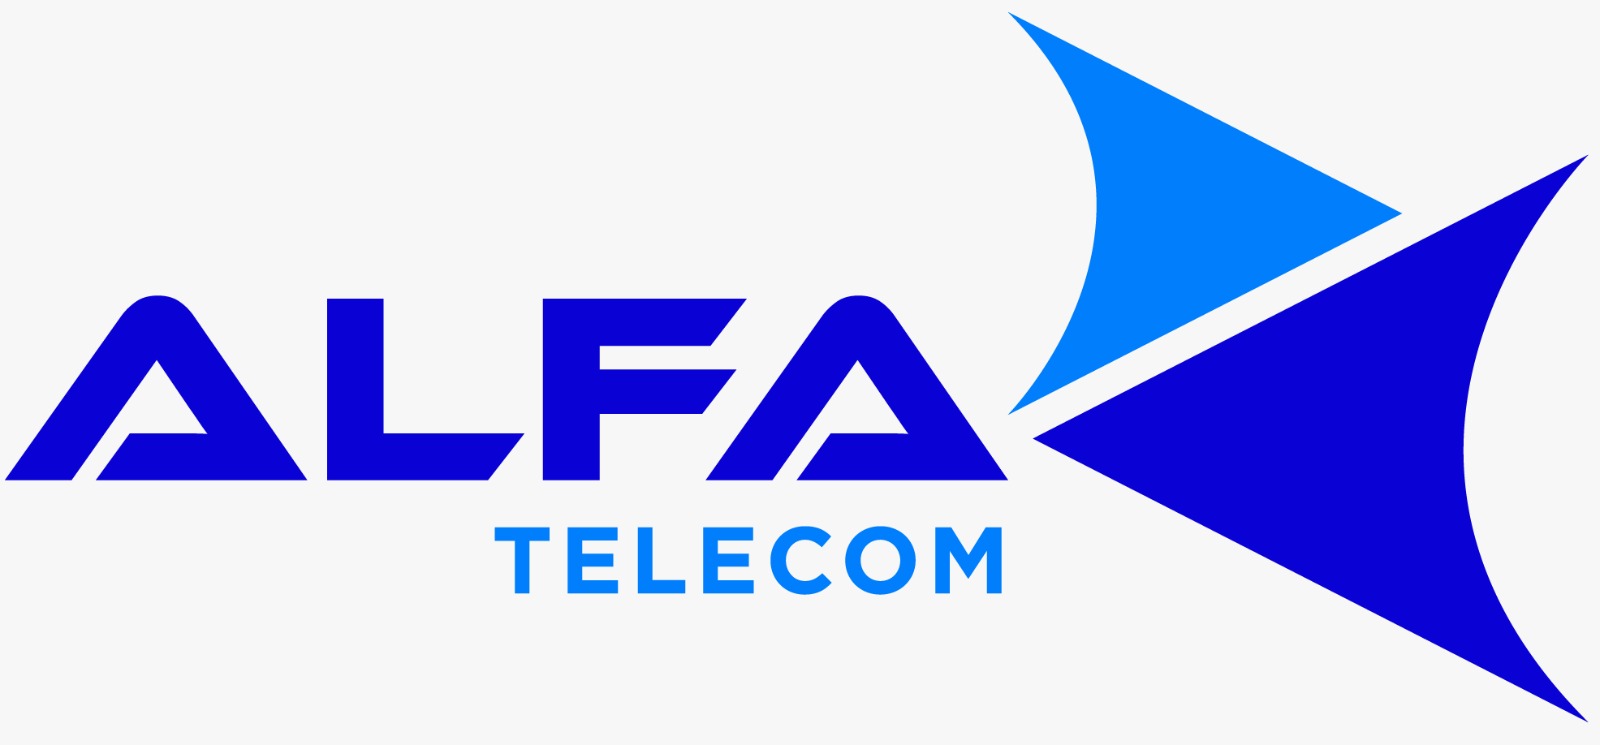 Alfa Telecom